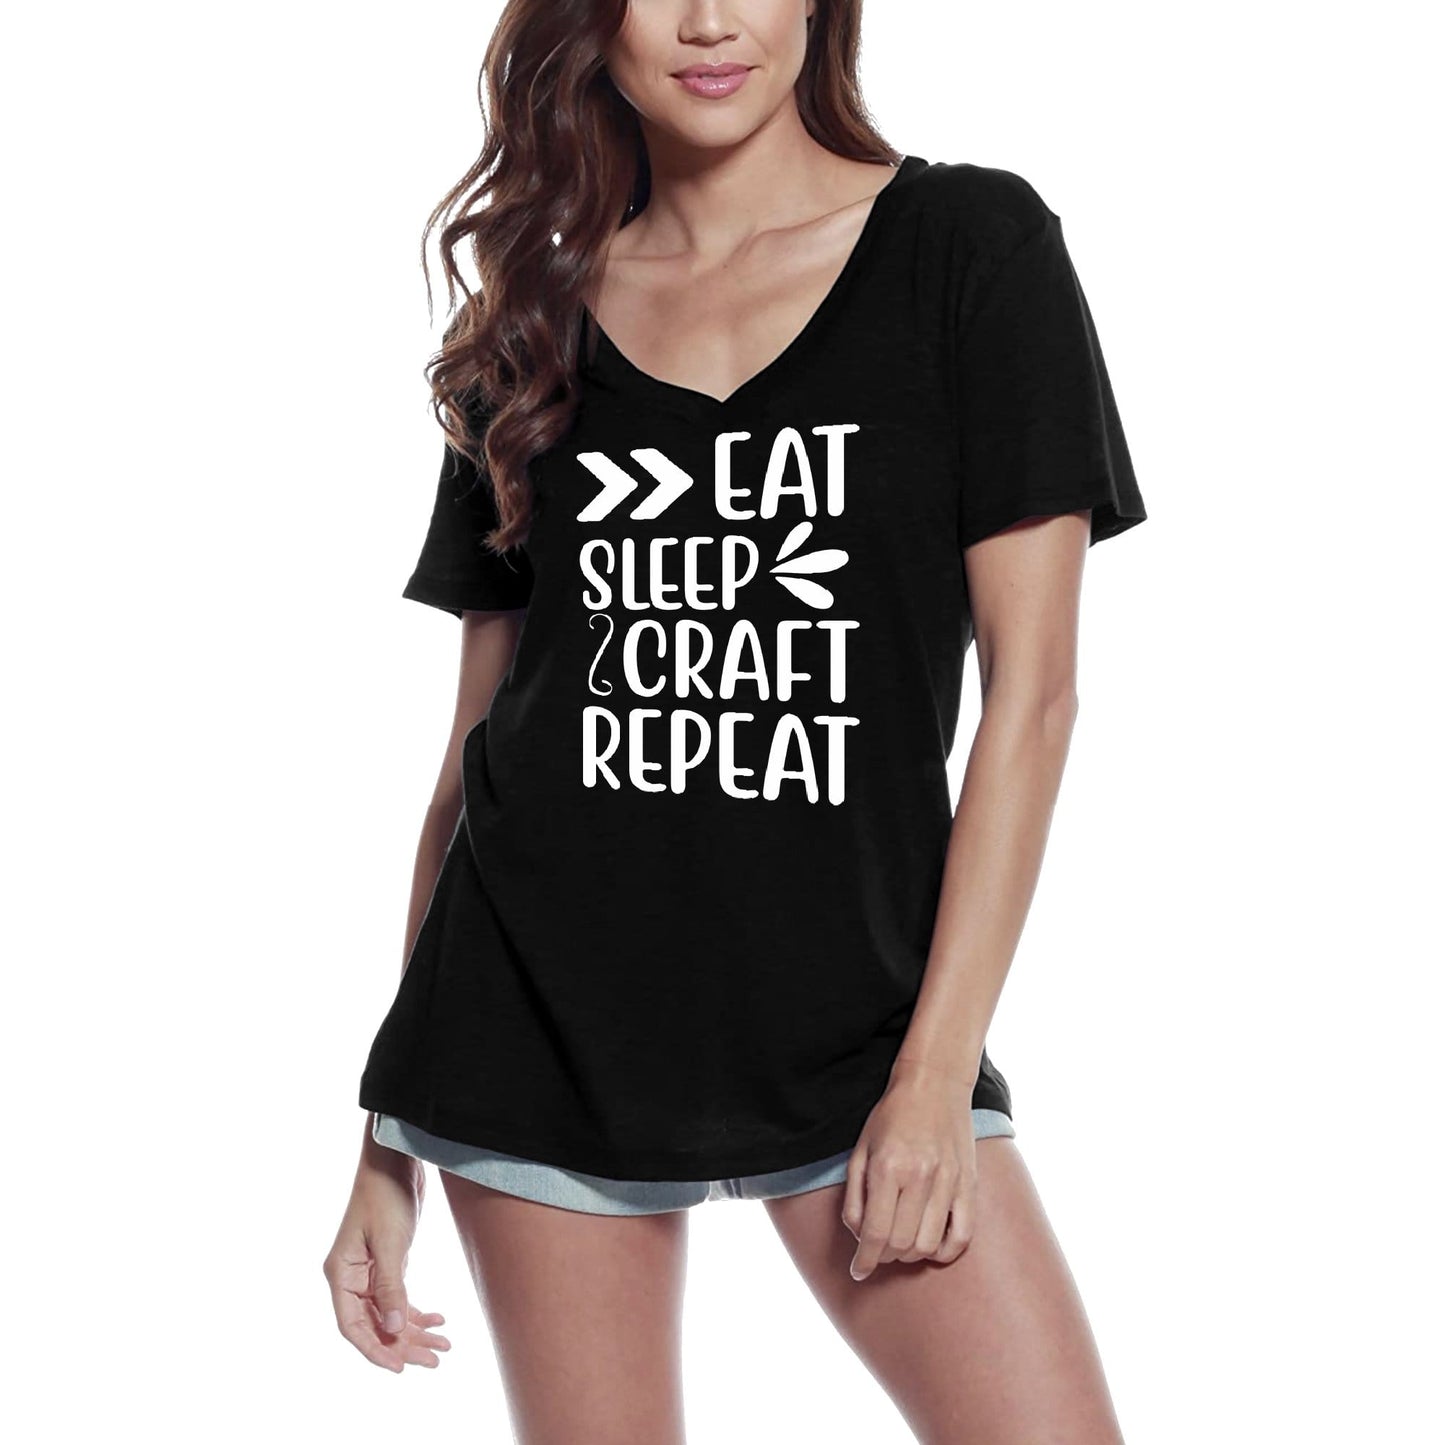 ULTRABASIC Women's T-Shirt Eat Sleep Craft Repeat - Short Sleeve Tee Shirt Tops